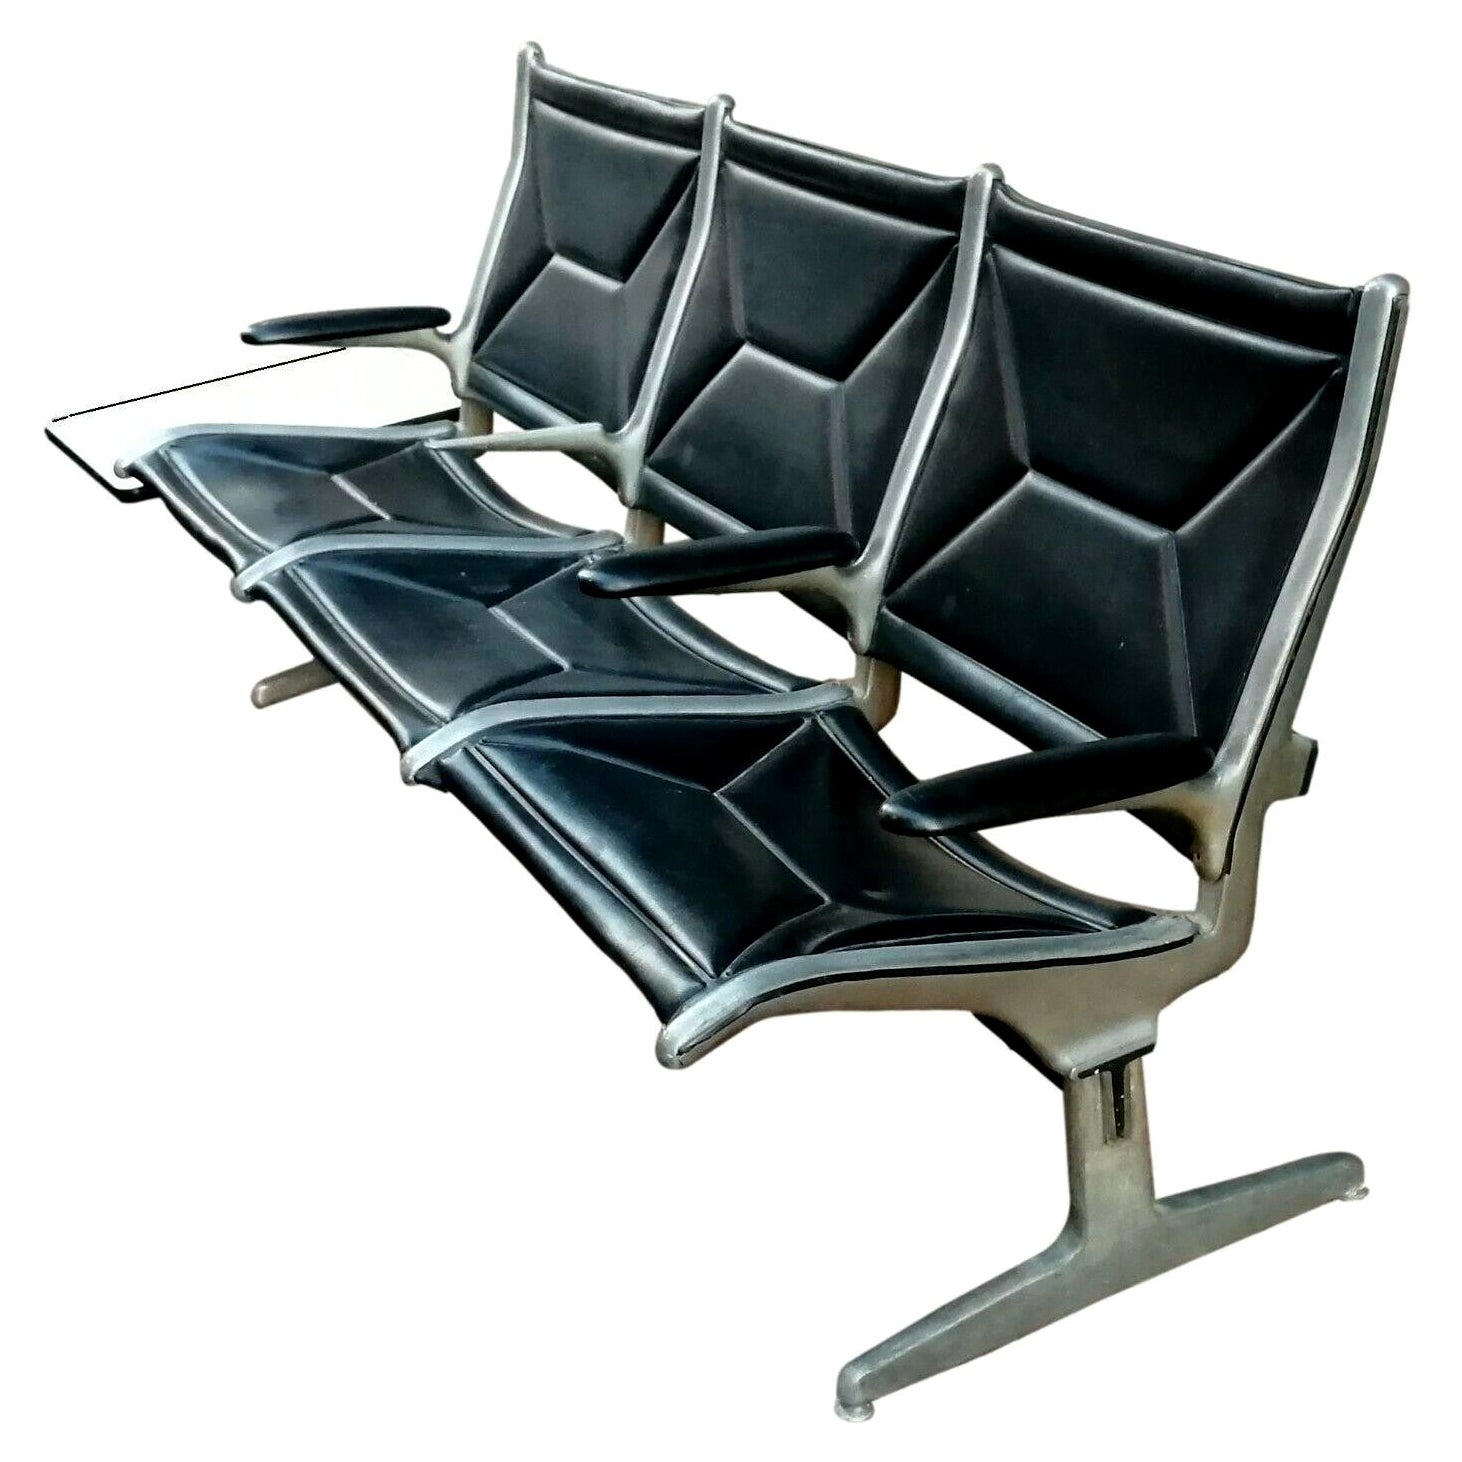 Sofa "Tandem" 3 Seater Design Charles Eames for Herman Miller 60s